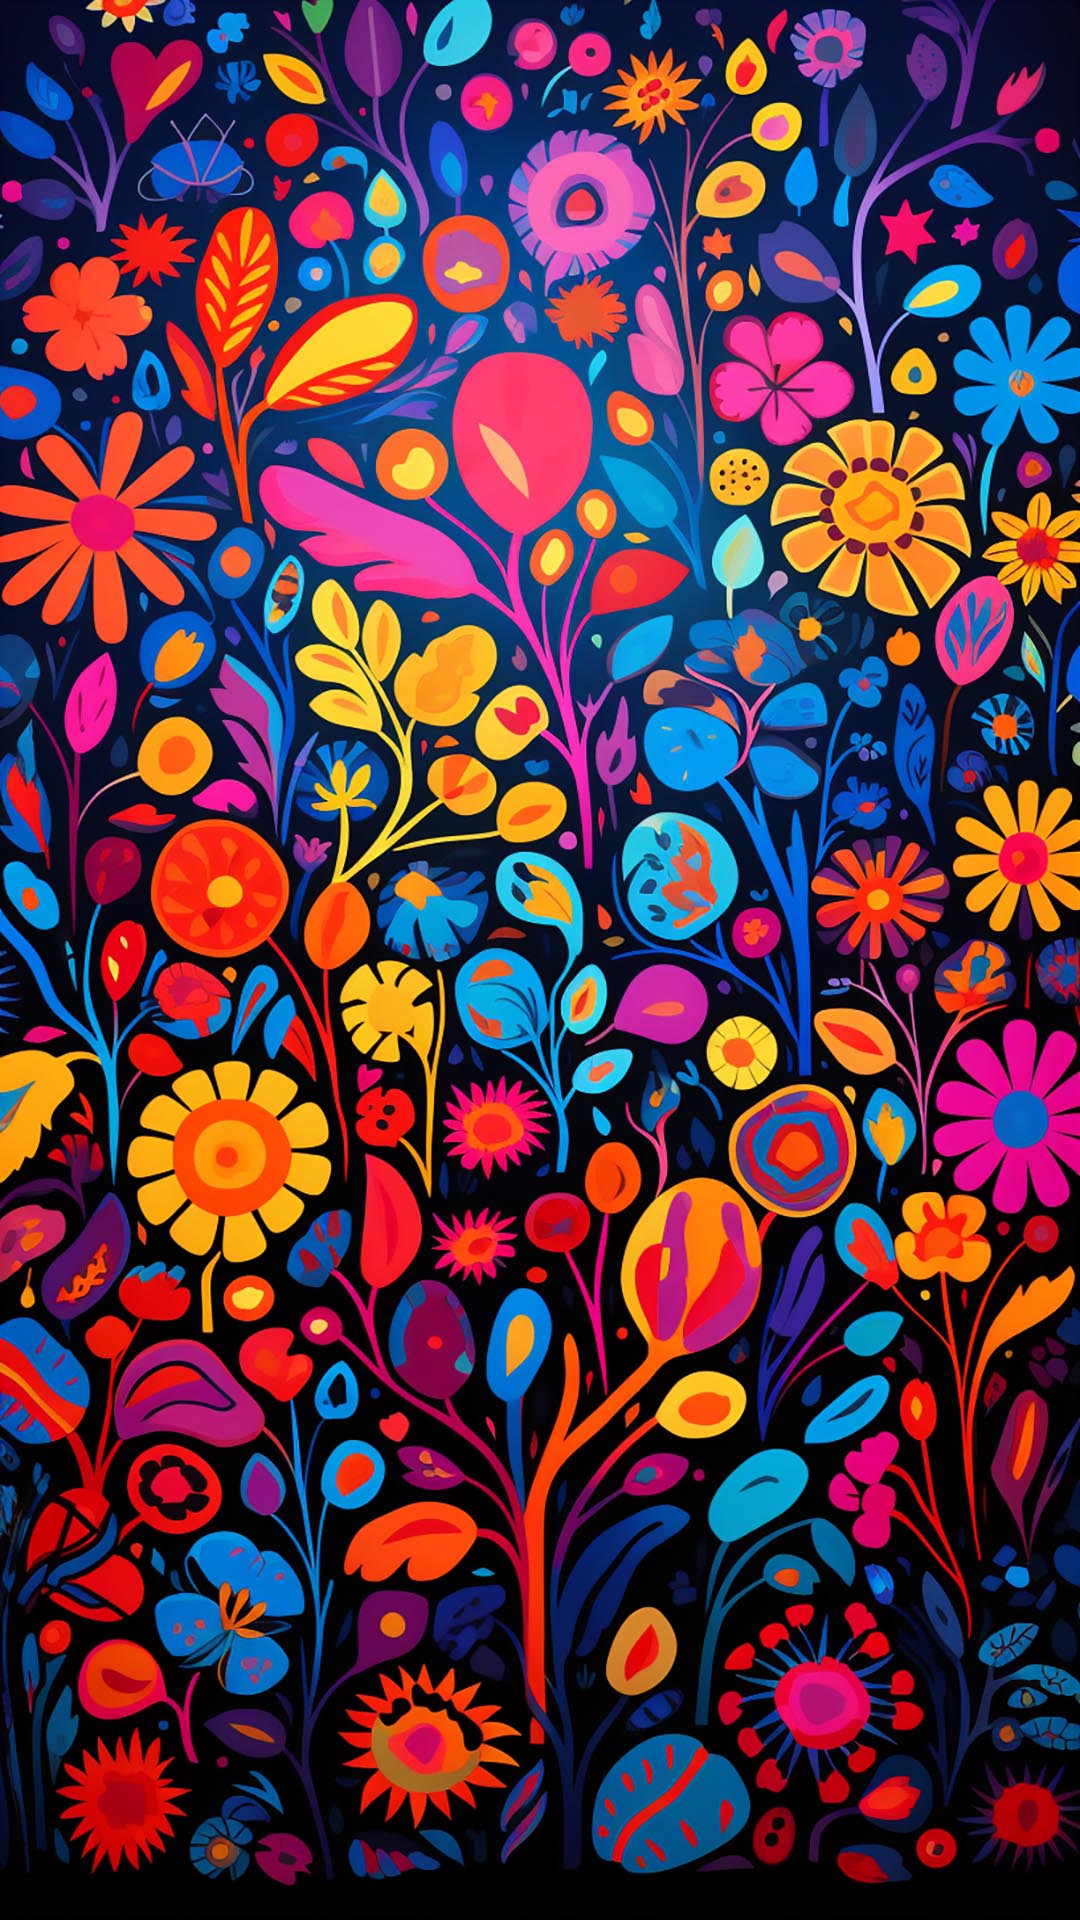 Colorful patterned floral art wallpaper